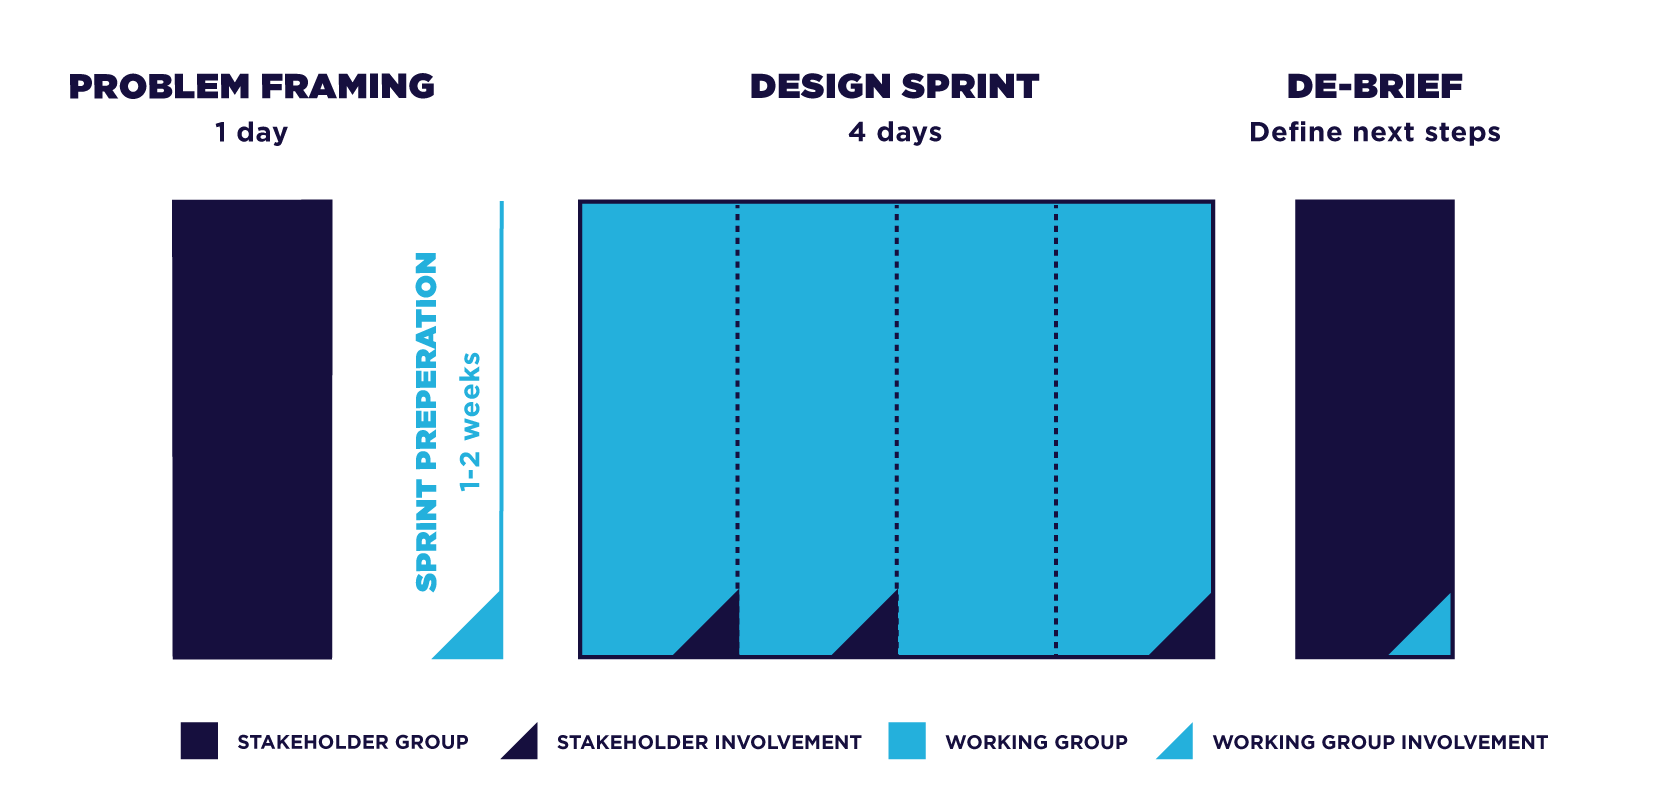 More Space For Light - Design Sprint 3.0